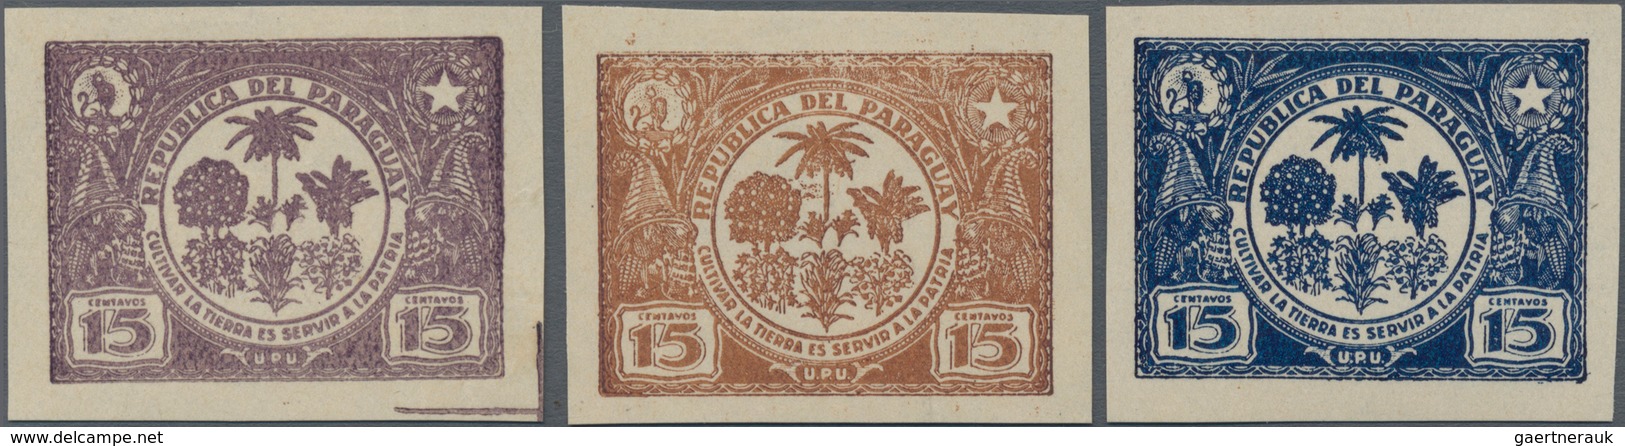 Thematik: Tabak / Tobacco: 1940, PARAGUAY: Prepared But Unissued Stamp 15 Cent. 'Cultivar La Tierra' - Tobacco